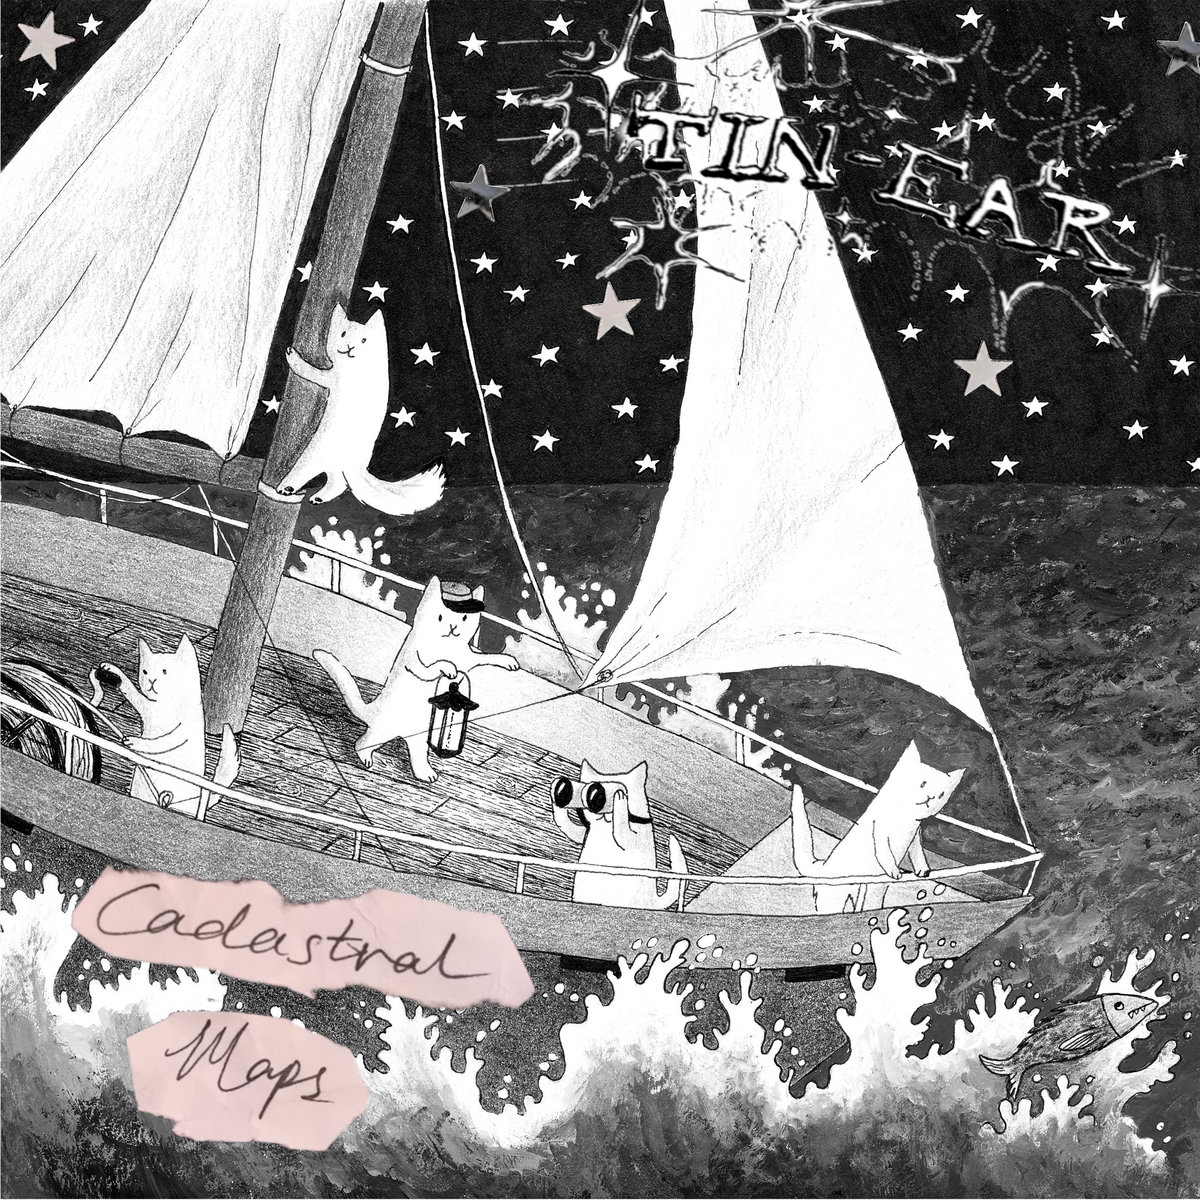 Tin-Ear Cadastral Maps album cover cats sailing a ship